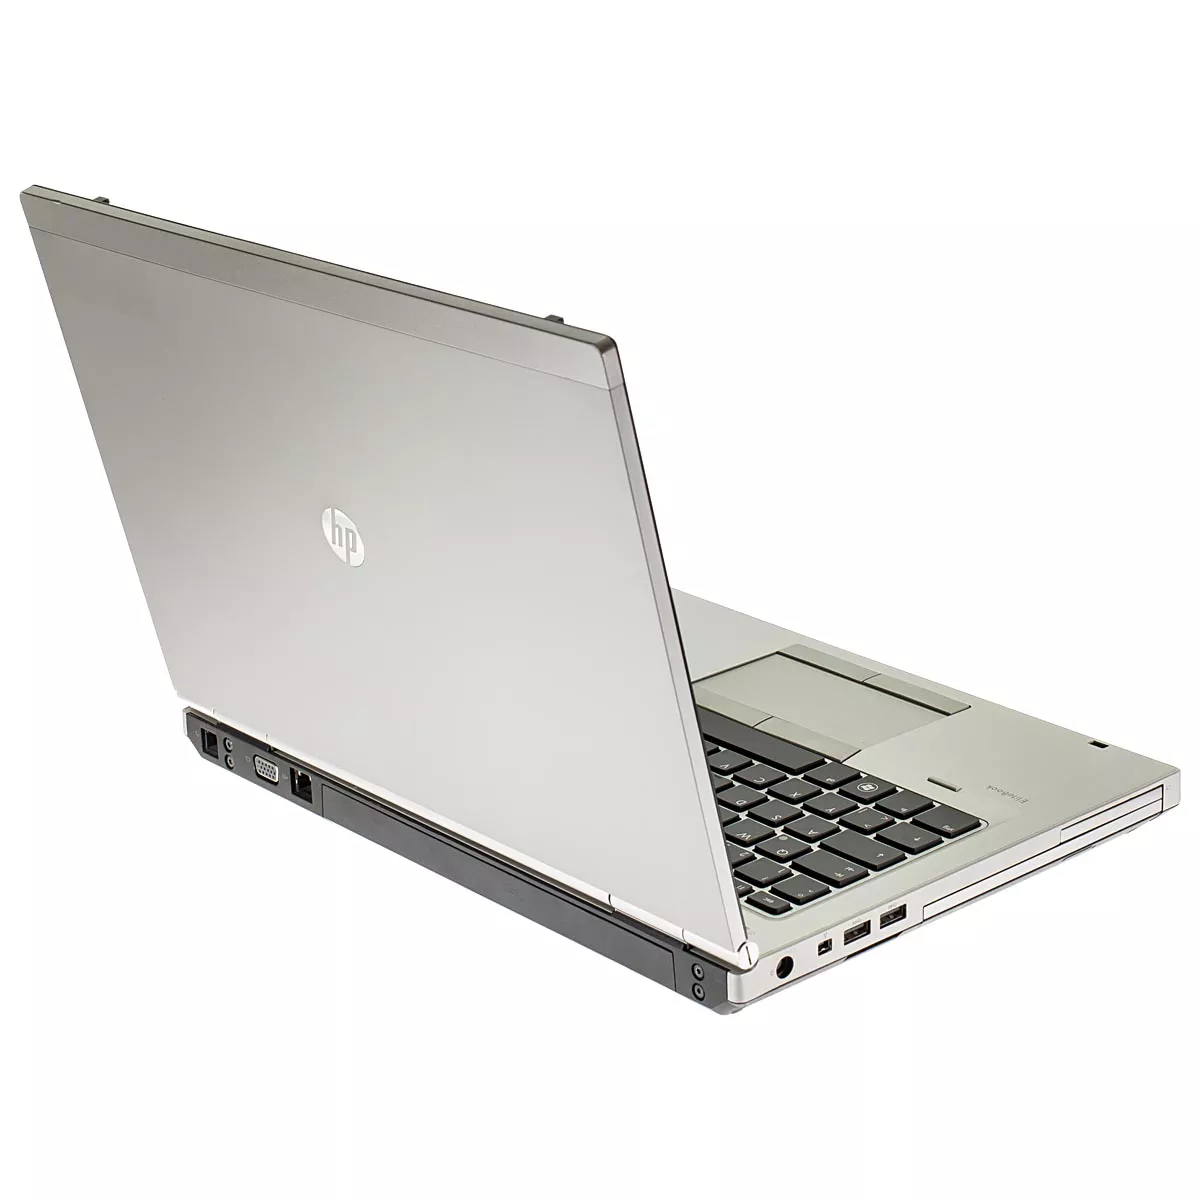 HP Elitebook 8460p i7 2620M 2,7 GHz Webcam